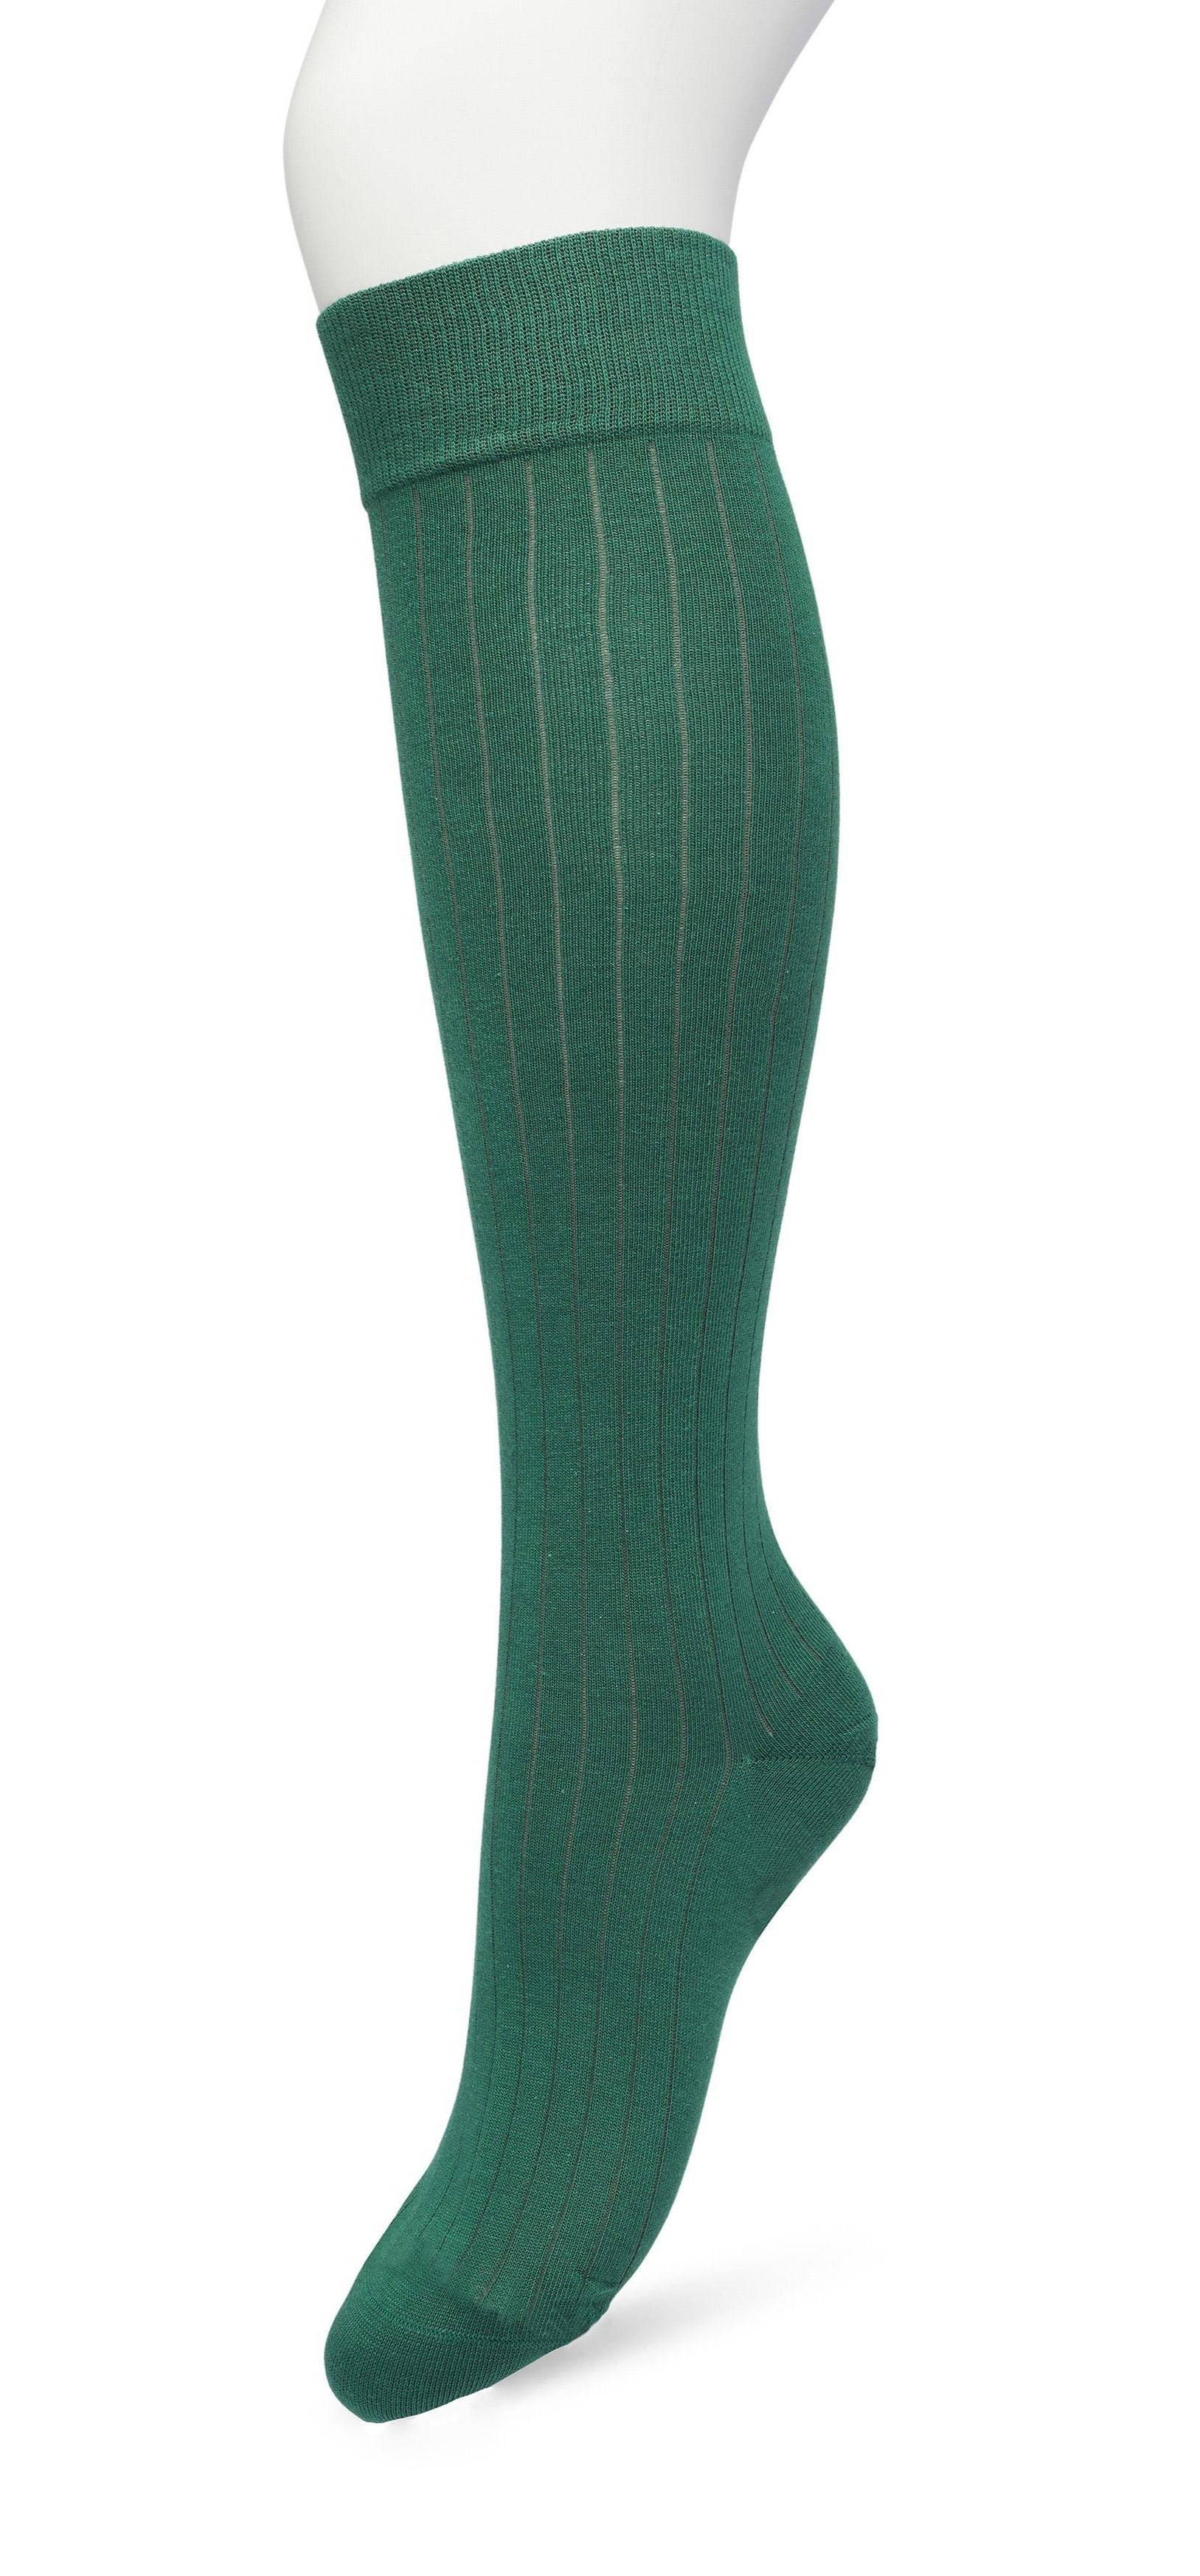 Bonnie Doon Rib Knee High Sock - Bottle green knitted rib knee-high sock with shaped heel, flat toe seam and deep elasticated cuff.